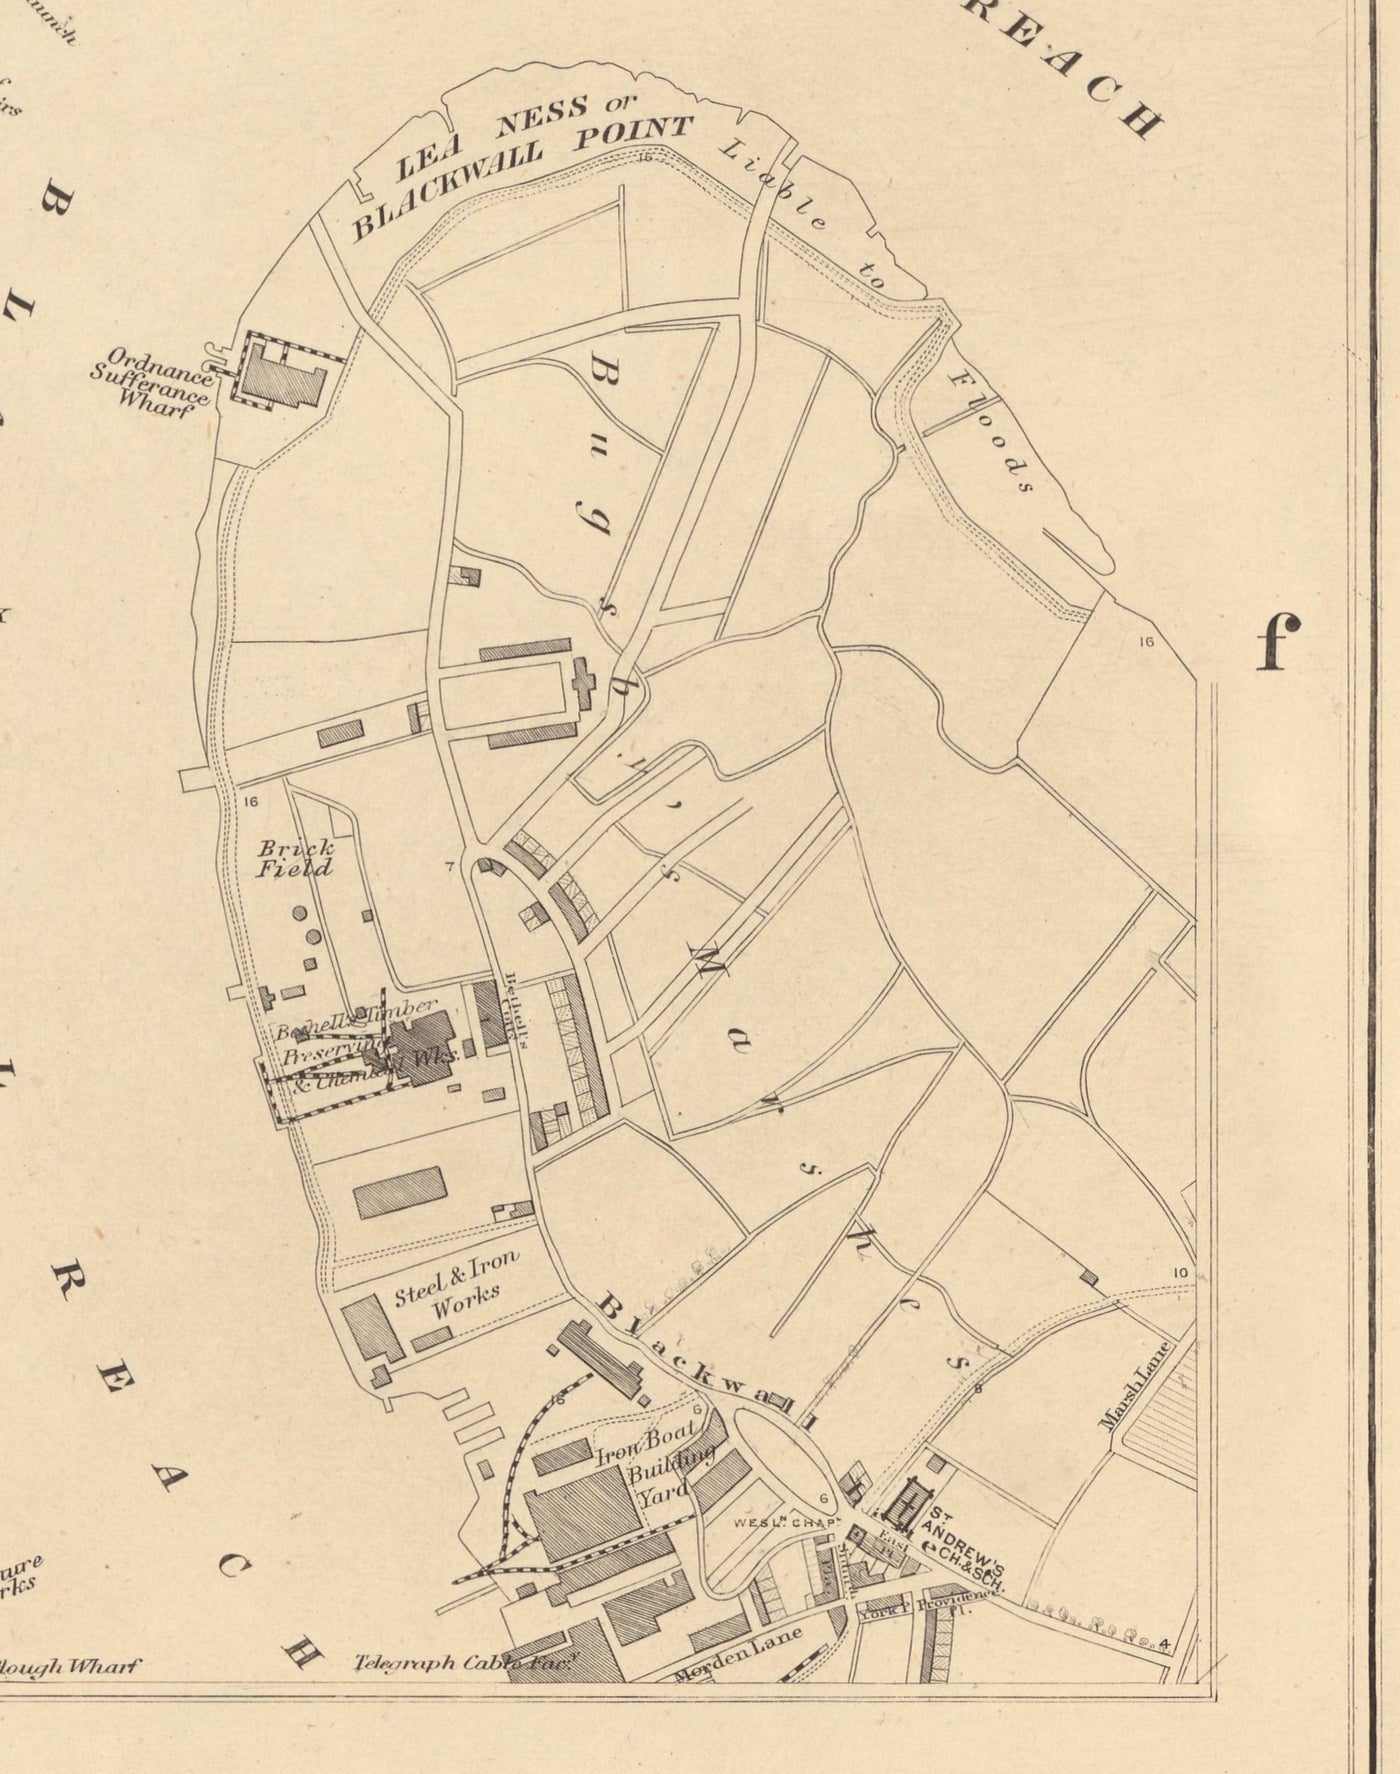 Alte Karte von East London 1862 von Edward Stanford - Isle of Hunde, Hamlets, Limehouse, Pappel, Surrey-Kais - E1, E3, E14, SE16